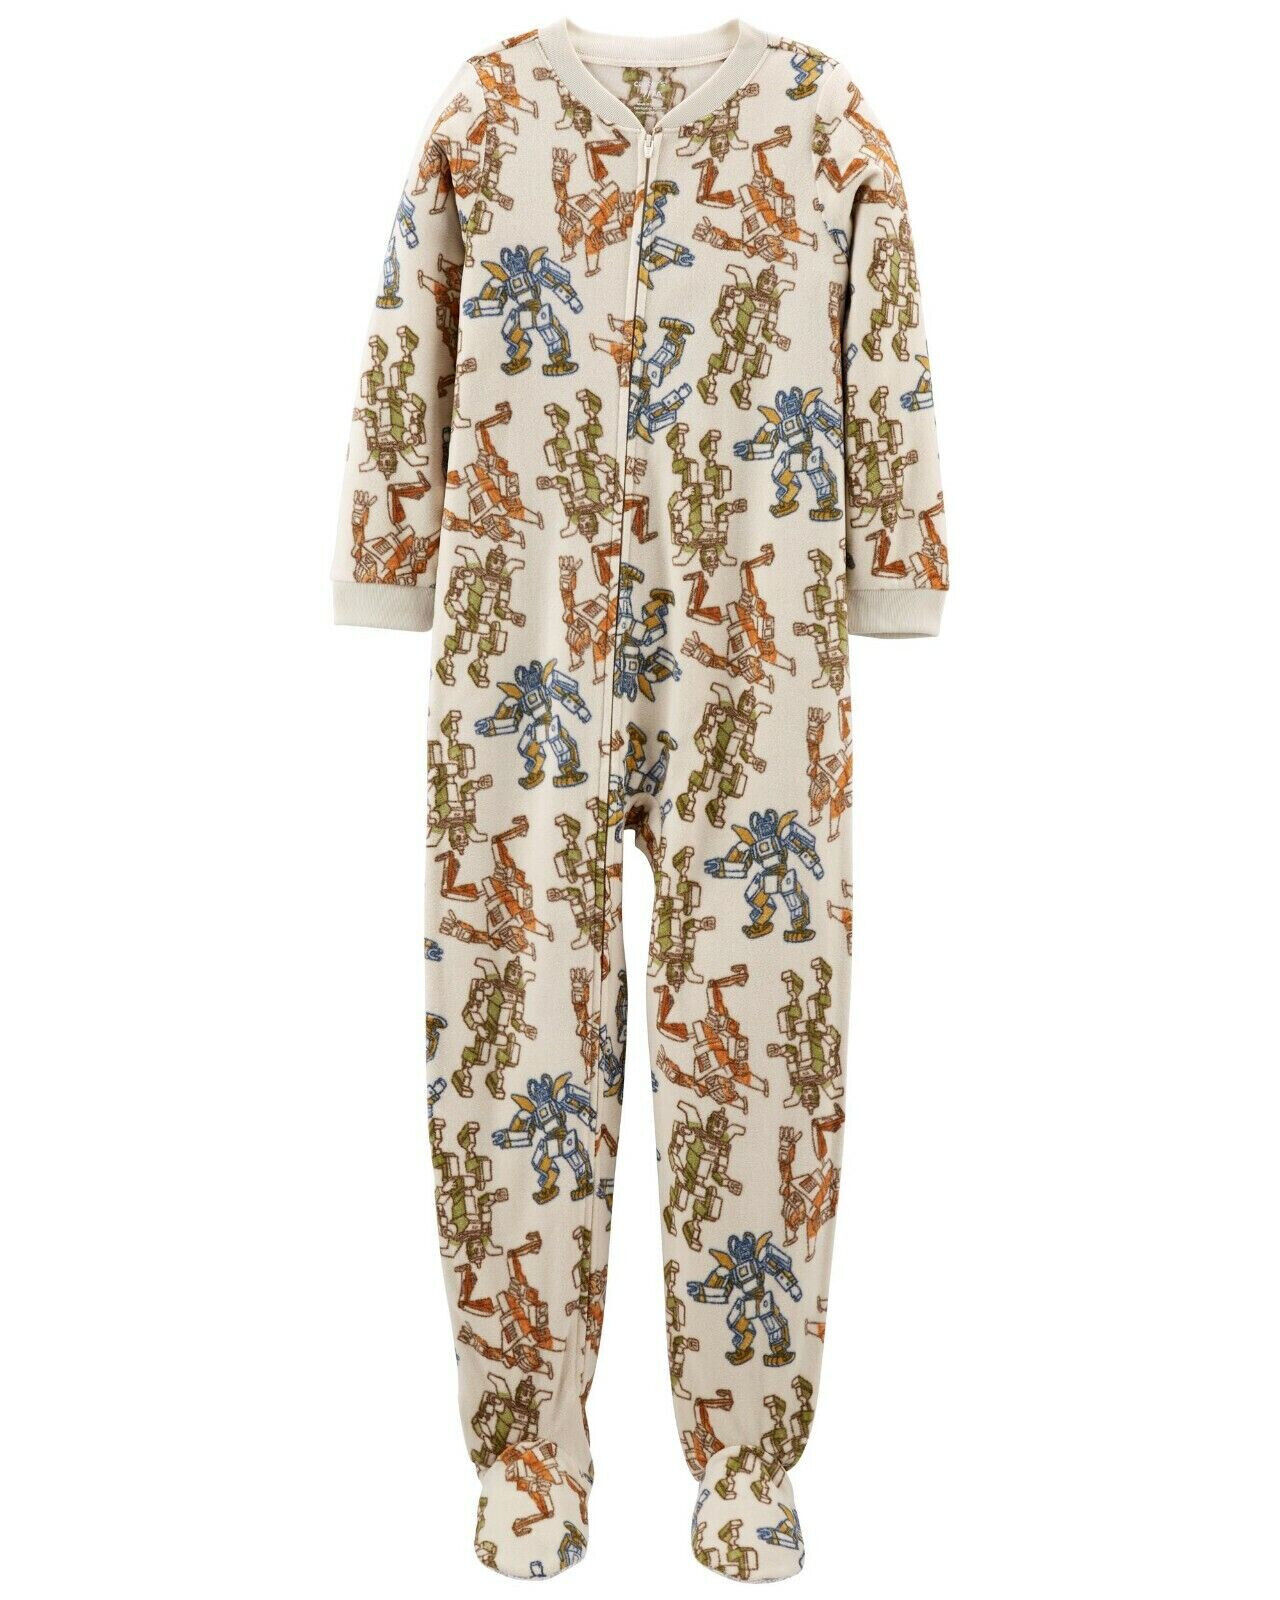 Boys Fleece Footed Blanket Sleeper Pajamas Union Suit One Piece Size 8 10 12 14